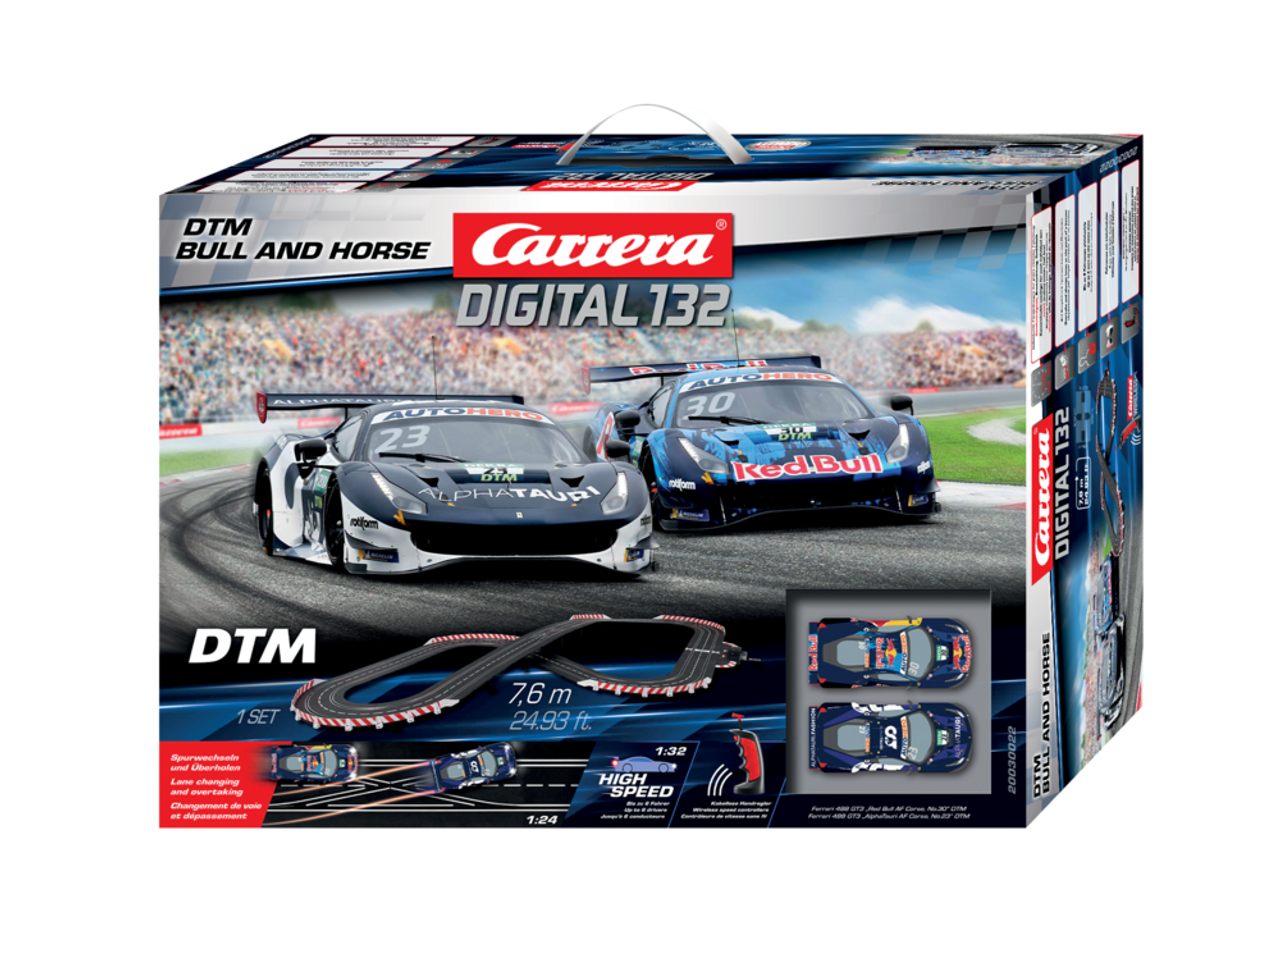 30022 Carrera Digital 132 DTM Bull and Horse 1:32 Slot Car Racing Set